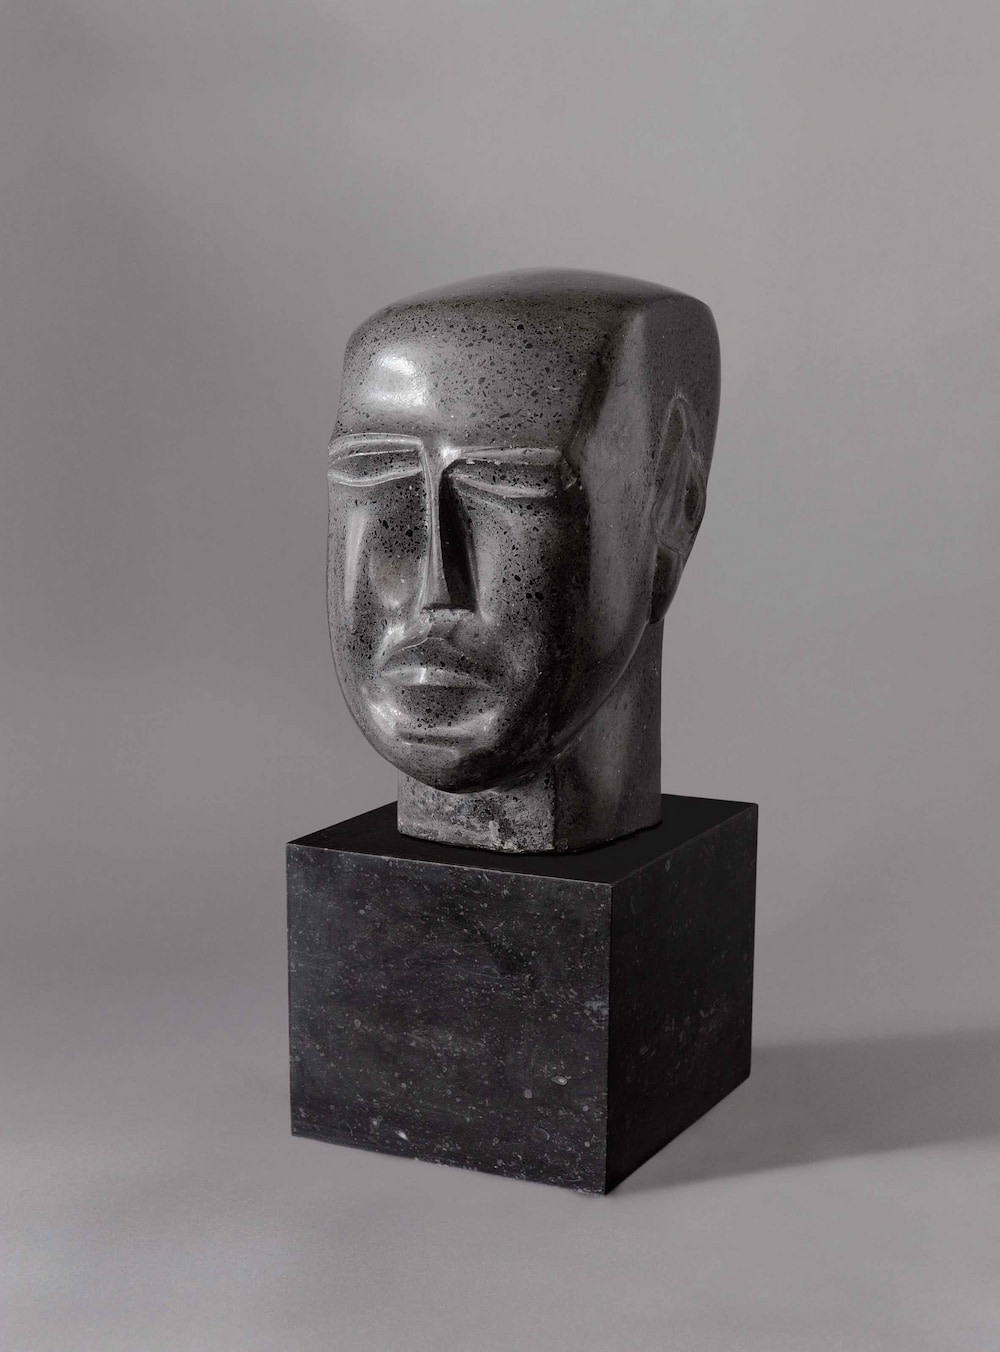 Ossip ZADKINE (1890-1967)<br />
Tête d’homme ,1923